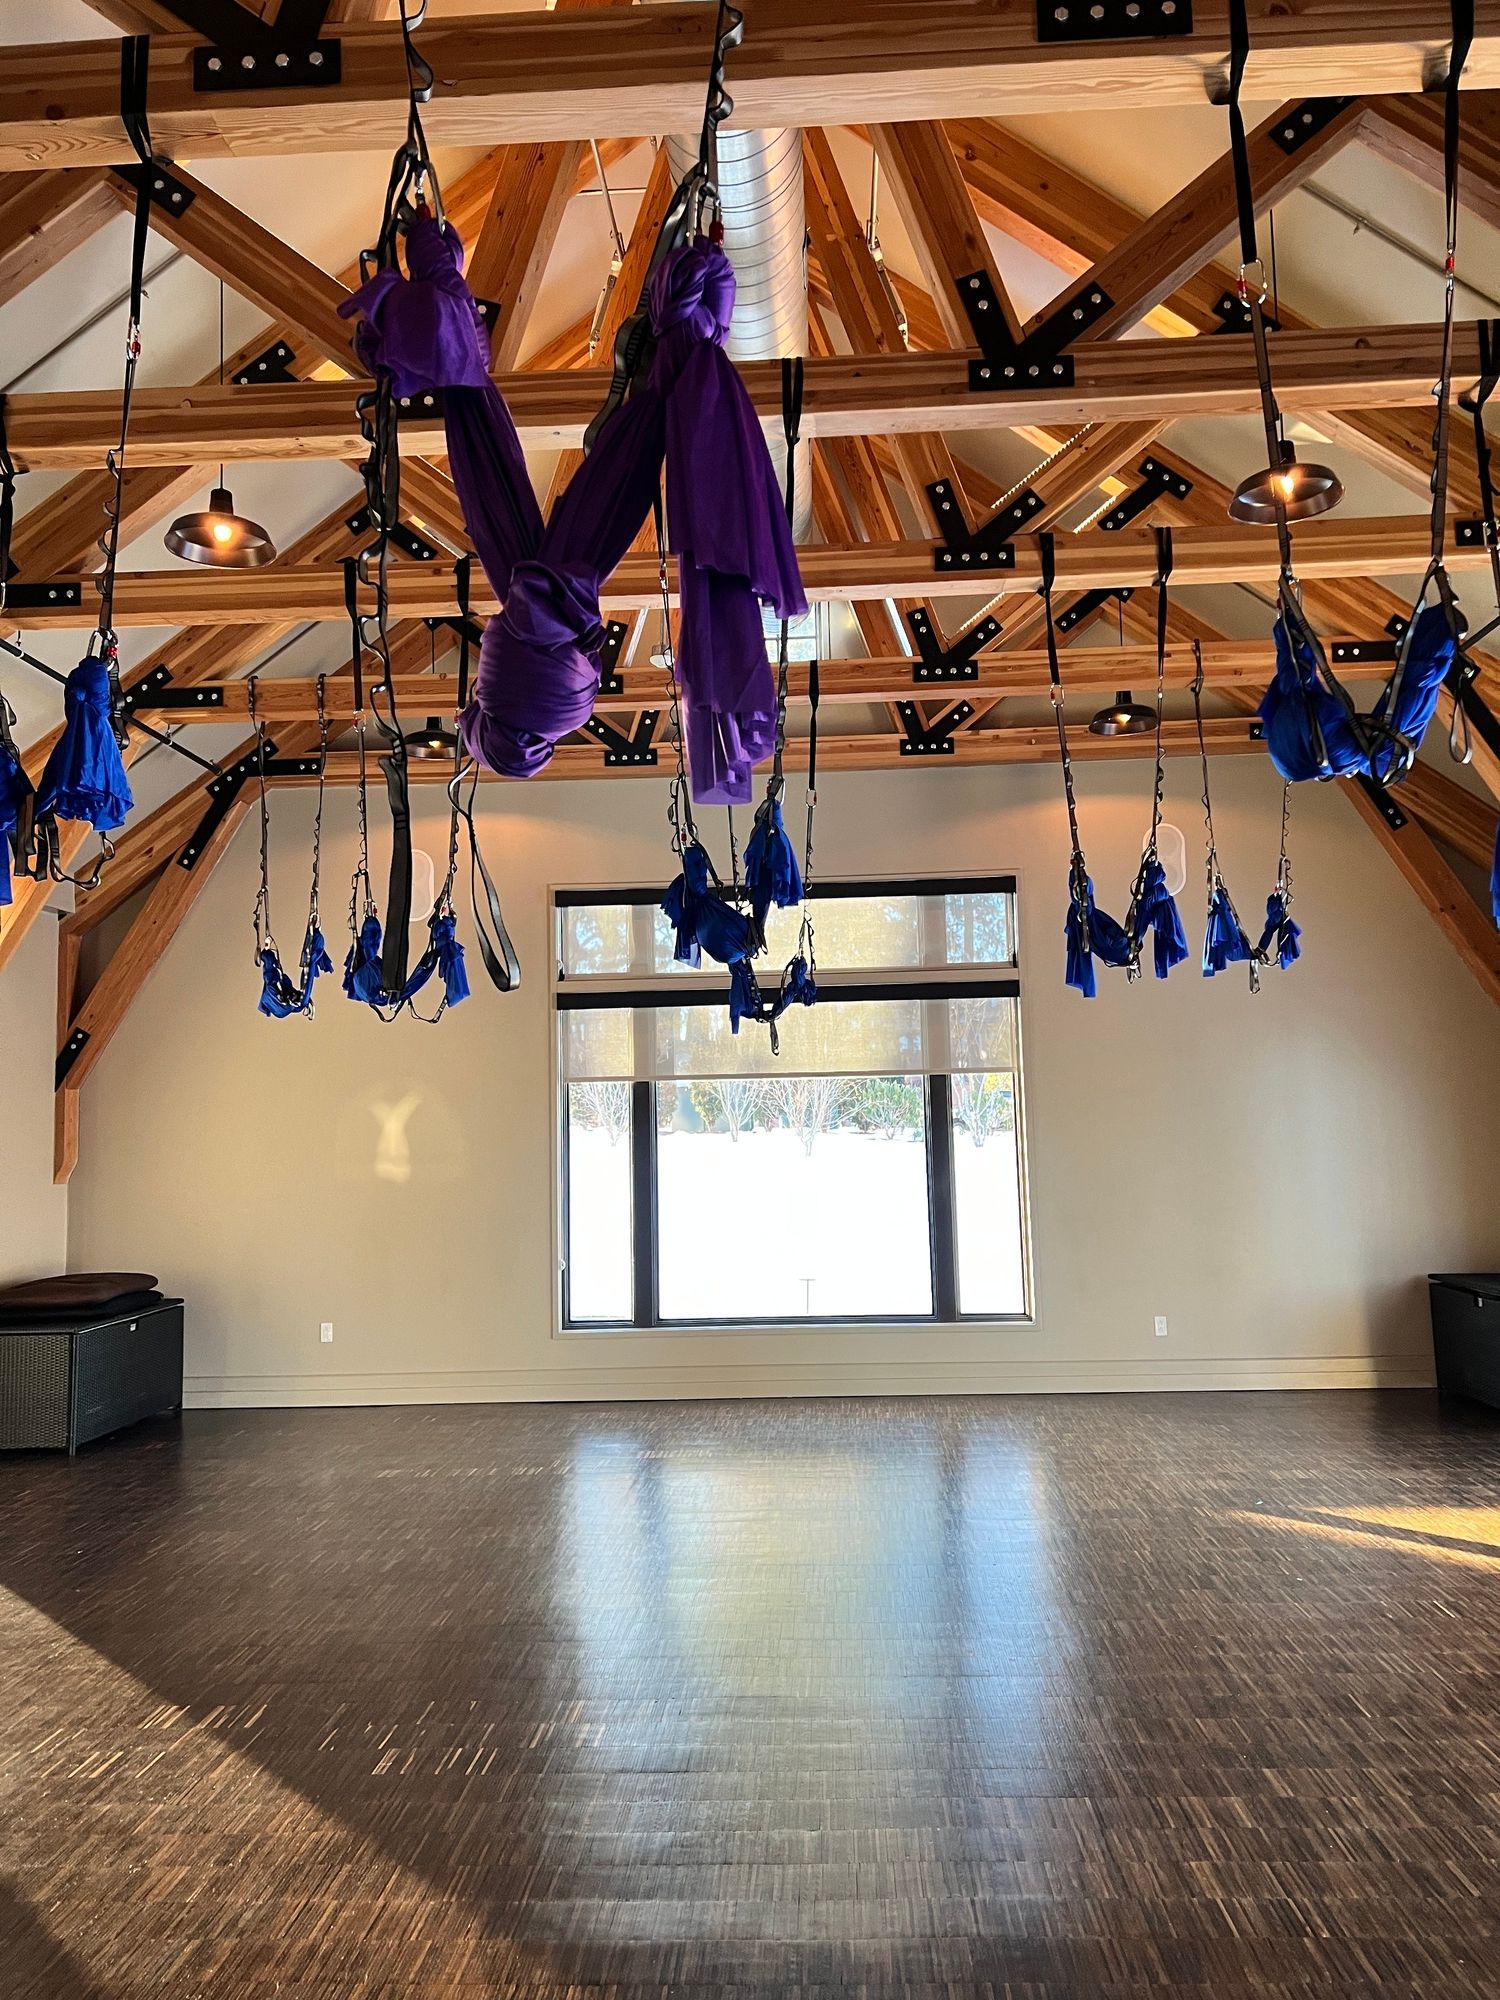 Aerial Yoga is a premium activity at Miraval Berkshires